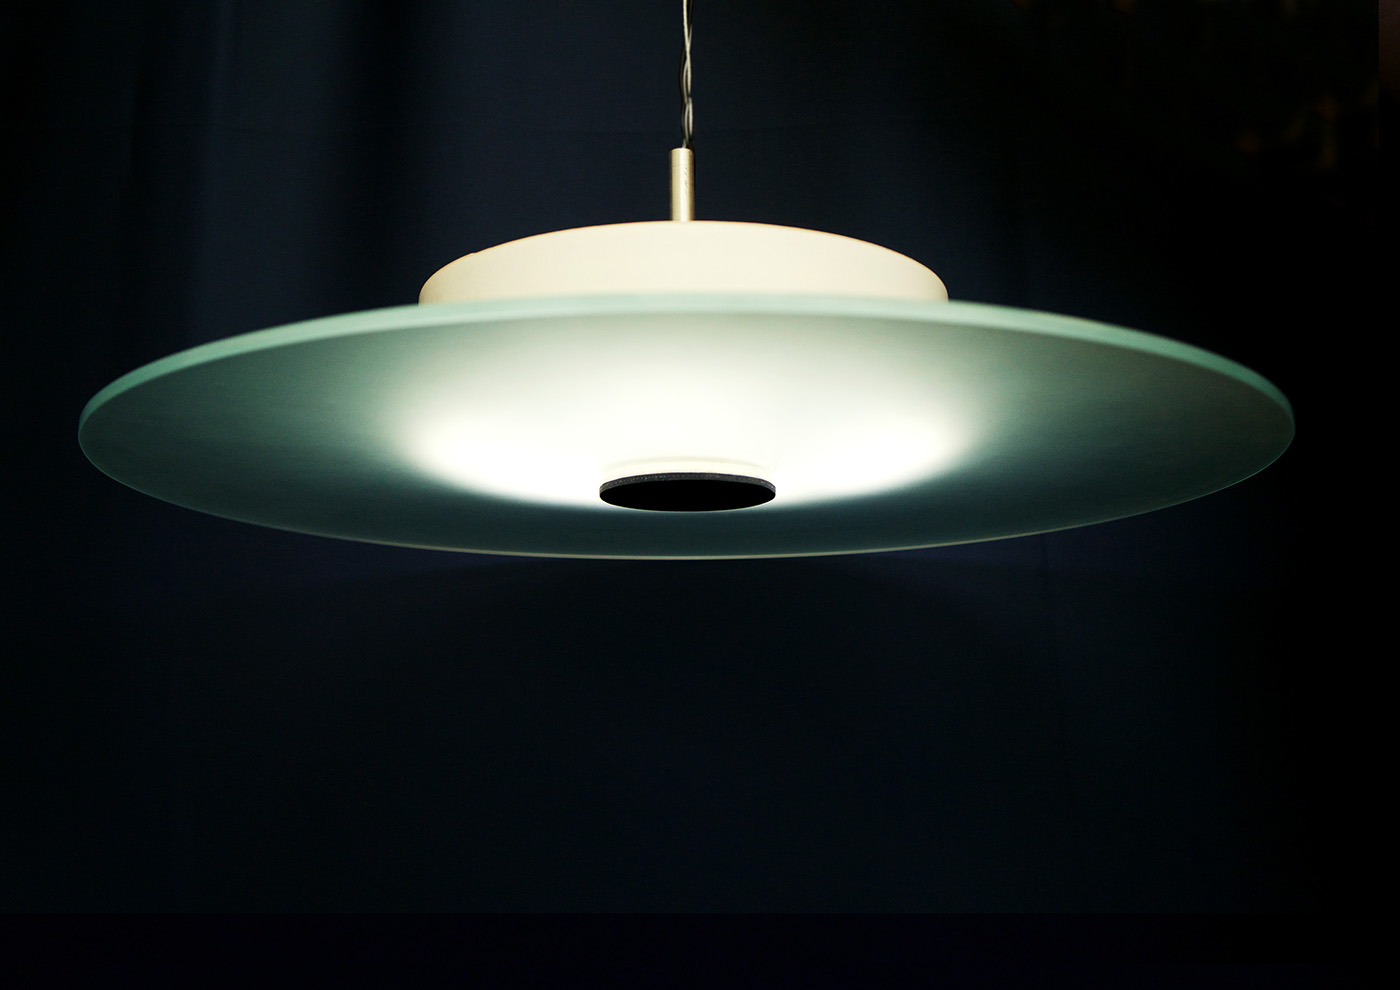 cantador miguel silva design light sound led RGB speaker ceiling Lamp Domus Academy play curiosity